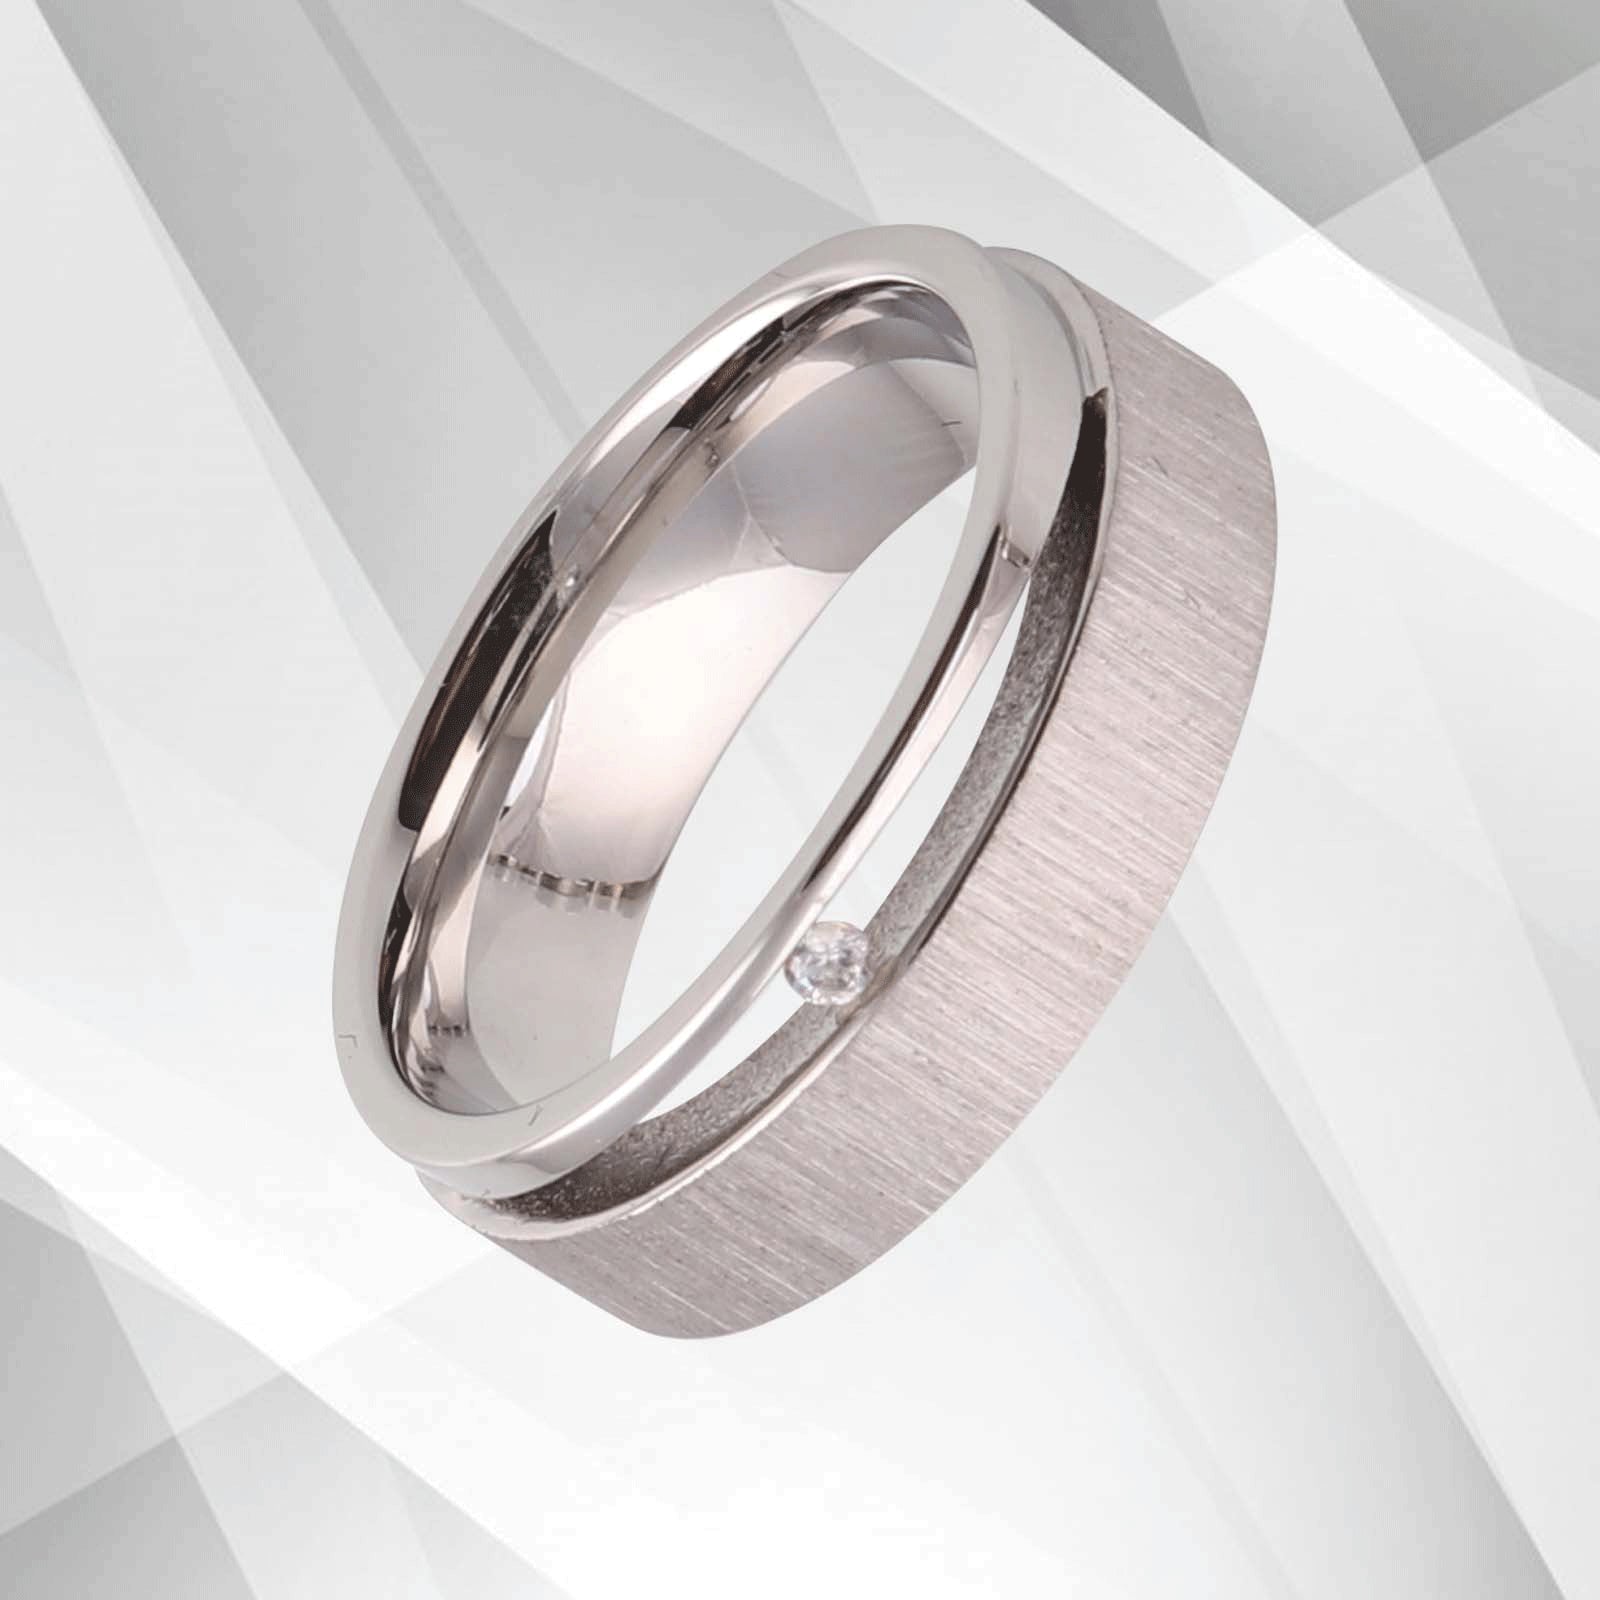 Titanium CZ Diamond Wedding Band Ring - 6mm Wide, Comfort Fit, 18Ct White Gold Finish, Handmade - Jewelry & Watches - Bijou Her -  -  - 